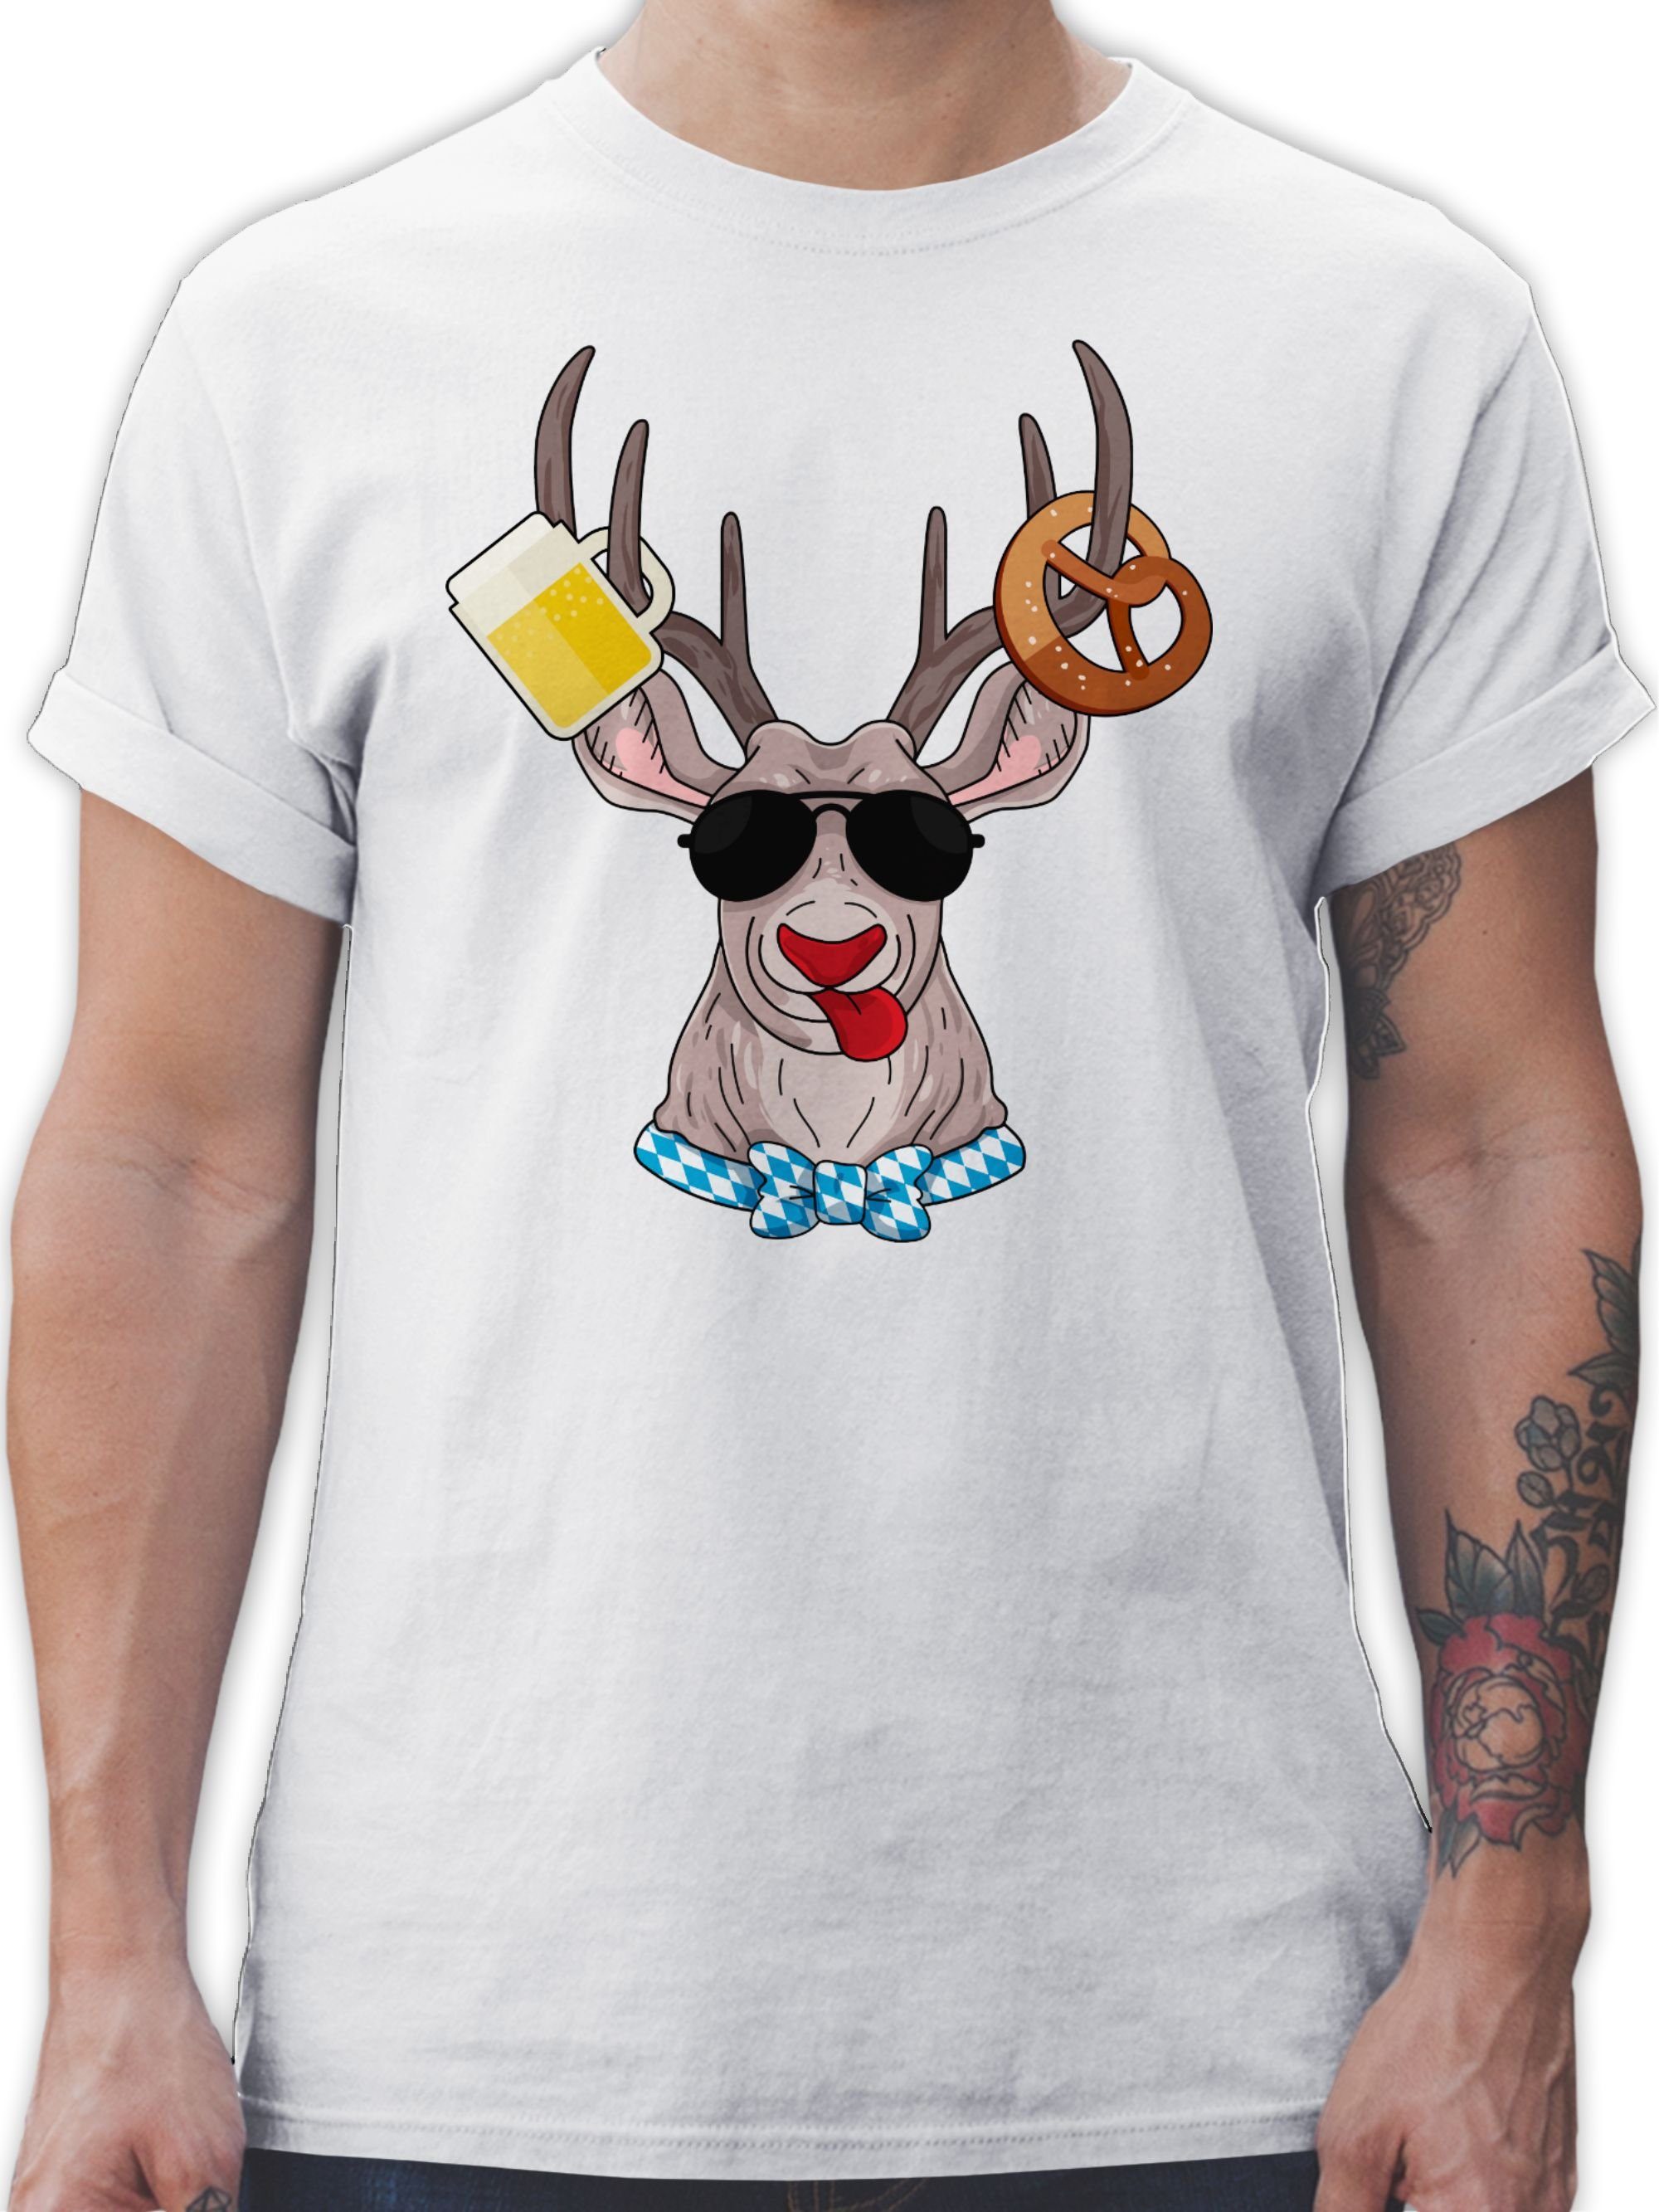 Shirtracer T-Shirt Oktoberfest Weiß Mode Oktoberfest Hirsch 3 Herren für